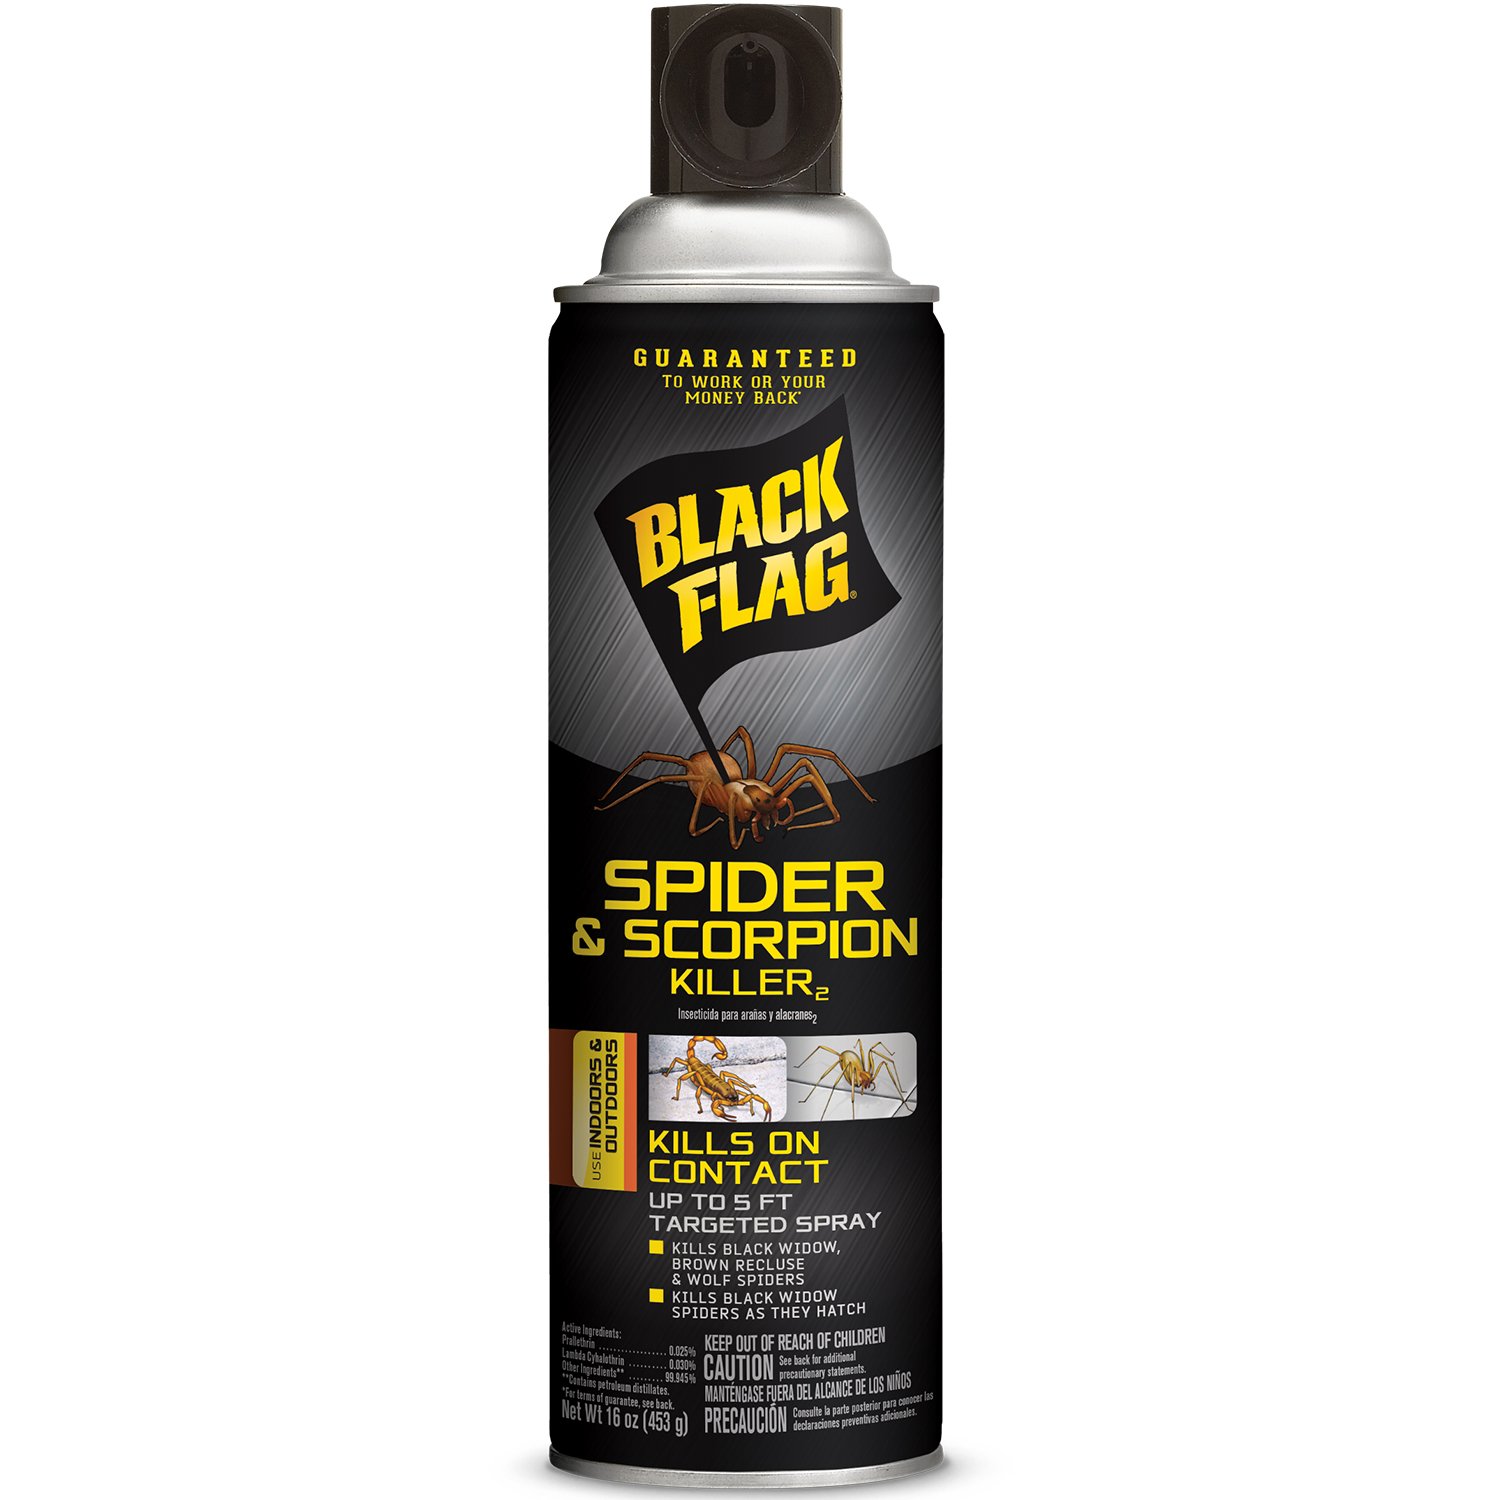 12-Pack 16oz Black Flag Spider and Scorpion Killer Aerosol Insecticide Spray $28.44